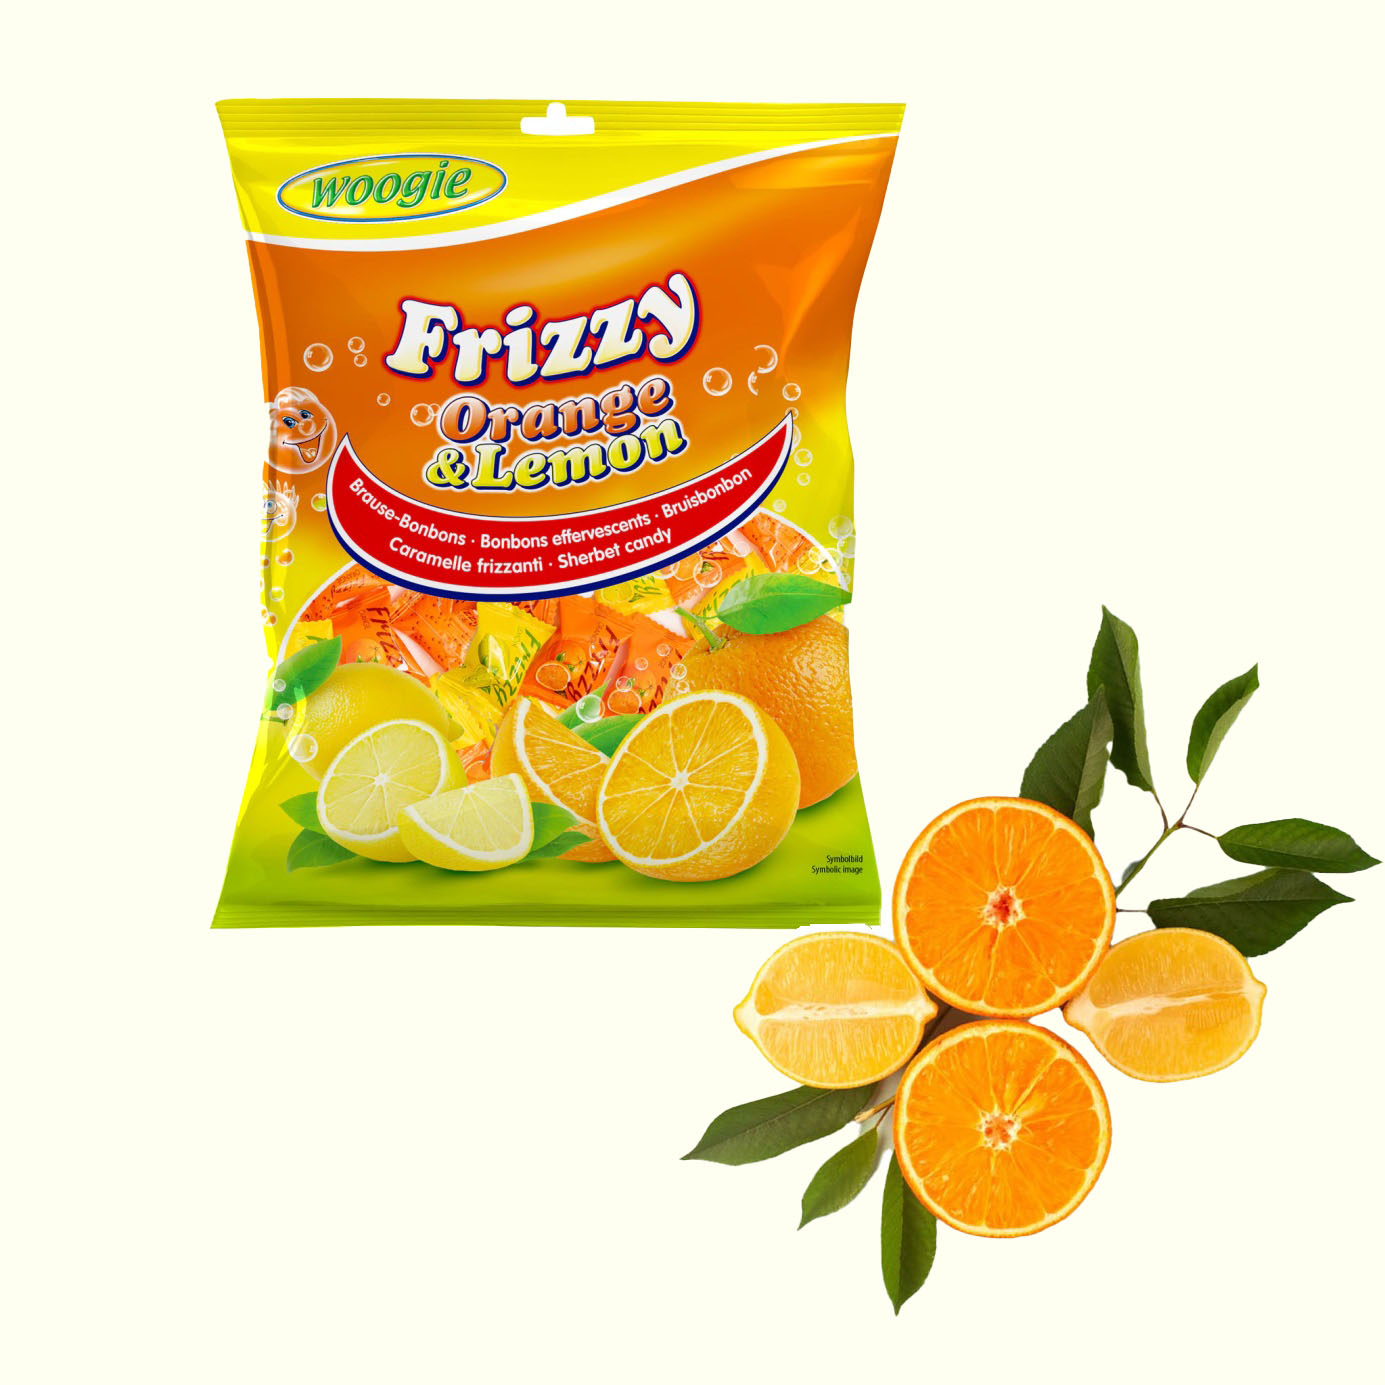 Woogie Frizzy Orange & Lemon Brausefüllung 170g